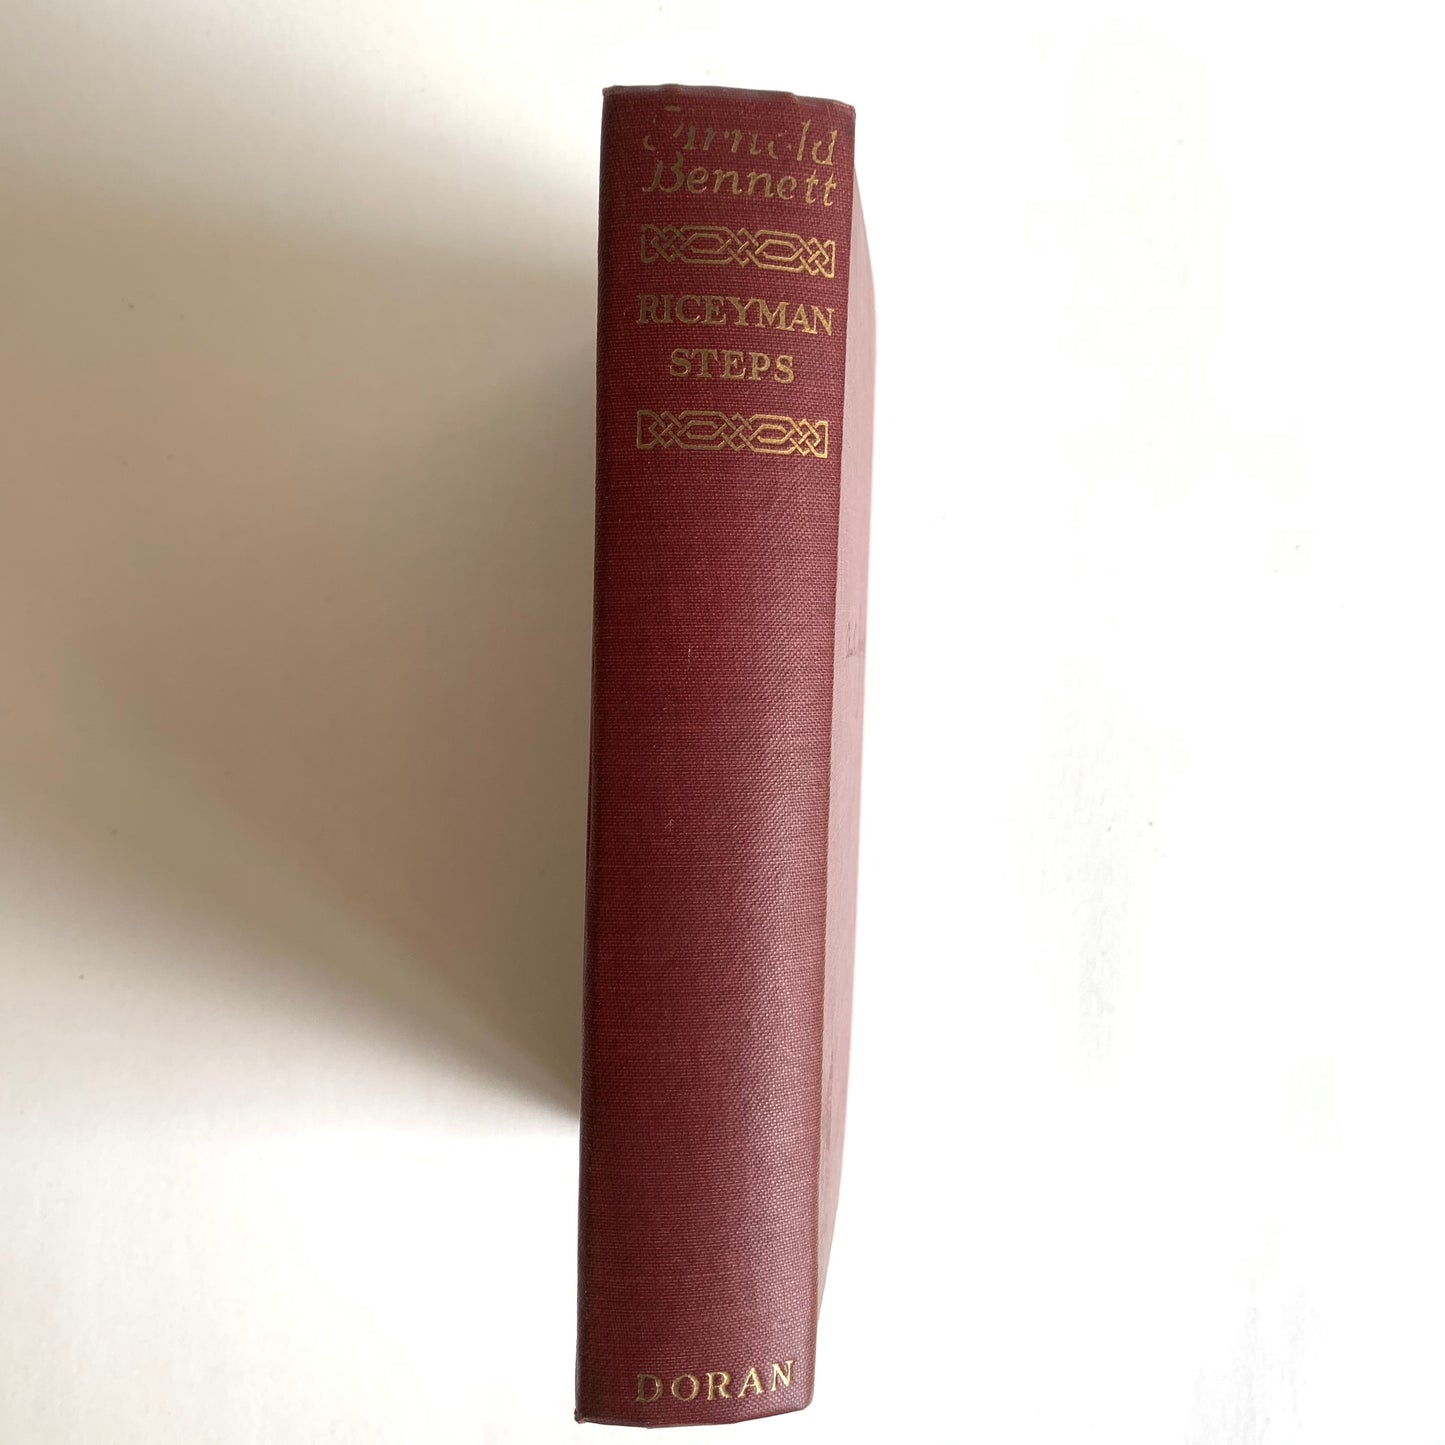 Vintage Book- Riceyman Steps by Arnold Bennett